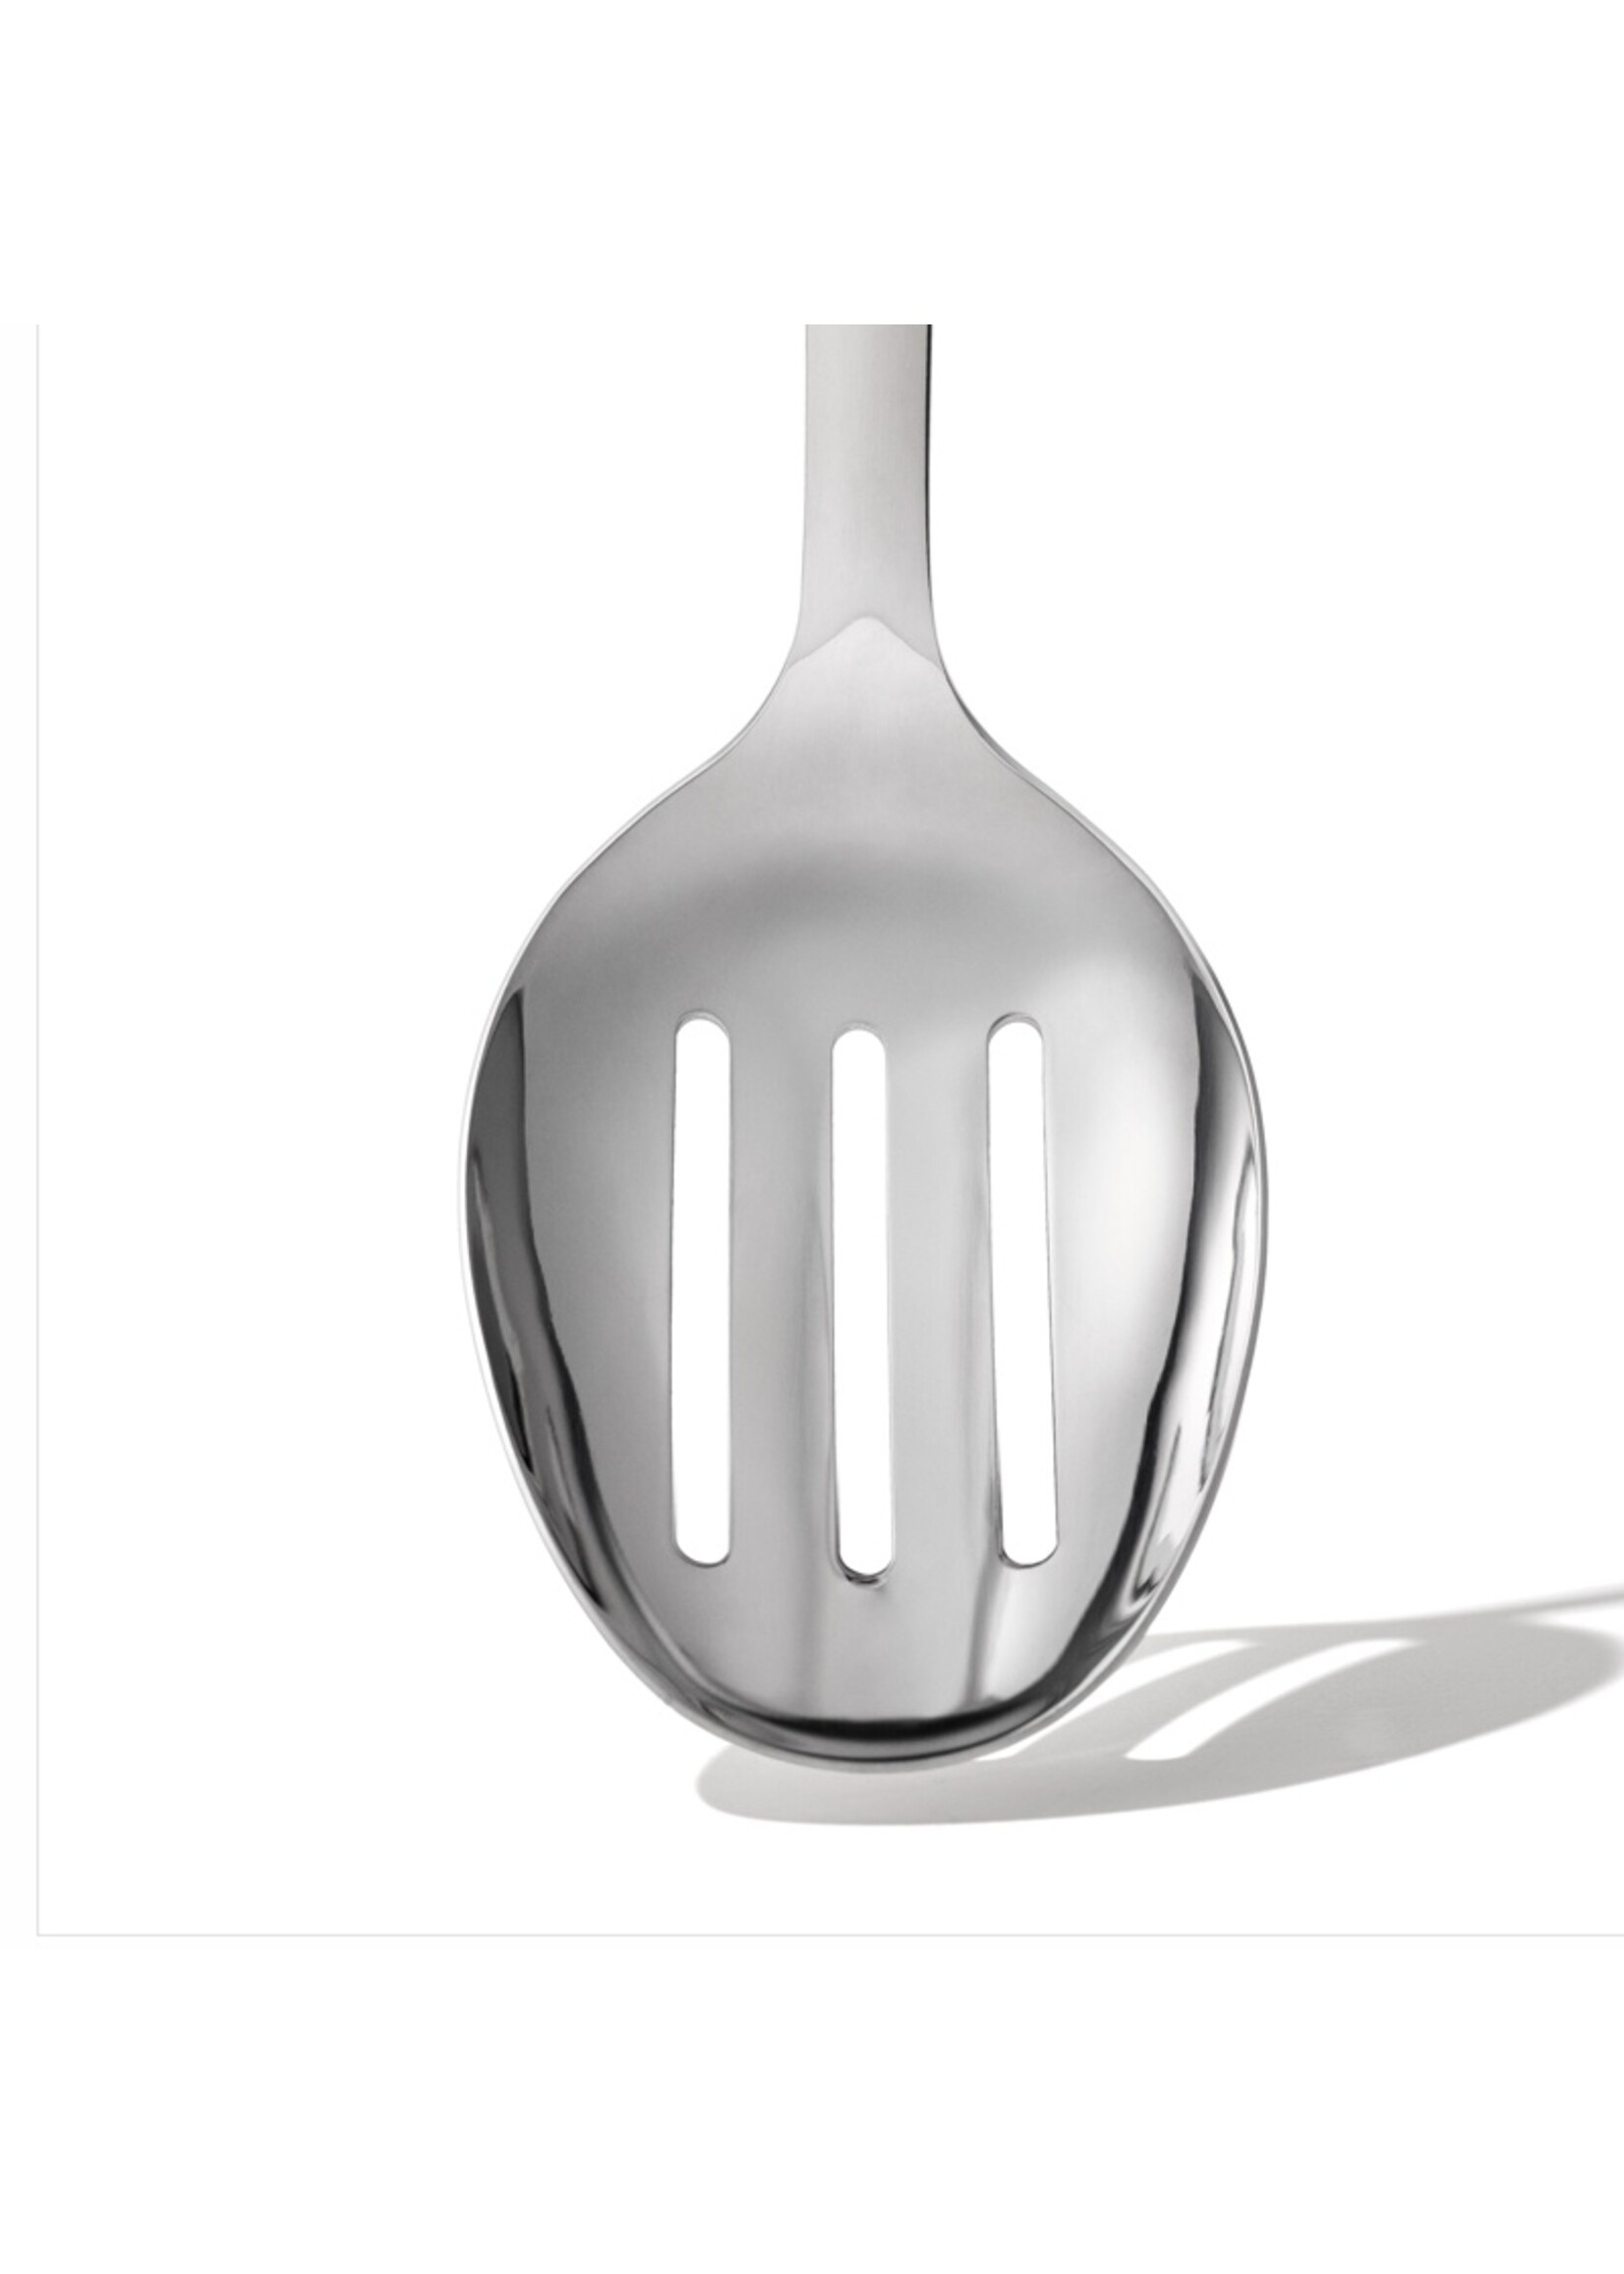 Danesco OXO Steel Slotted Cooking Spoon